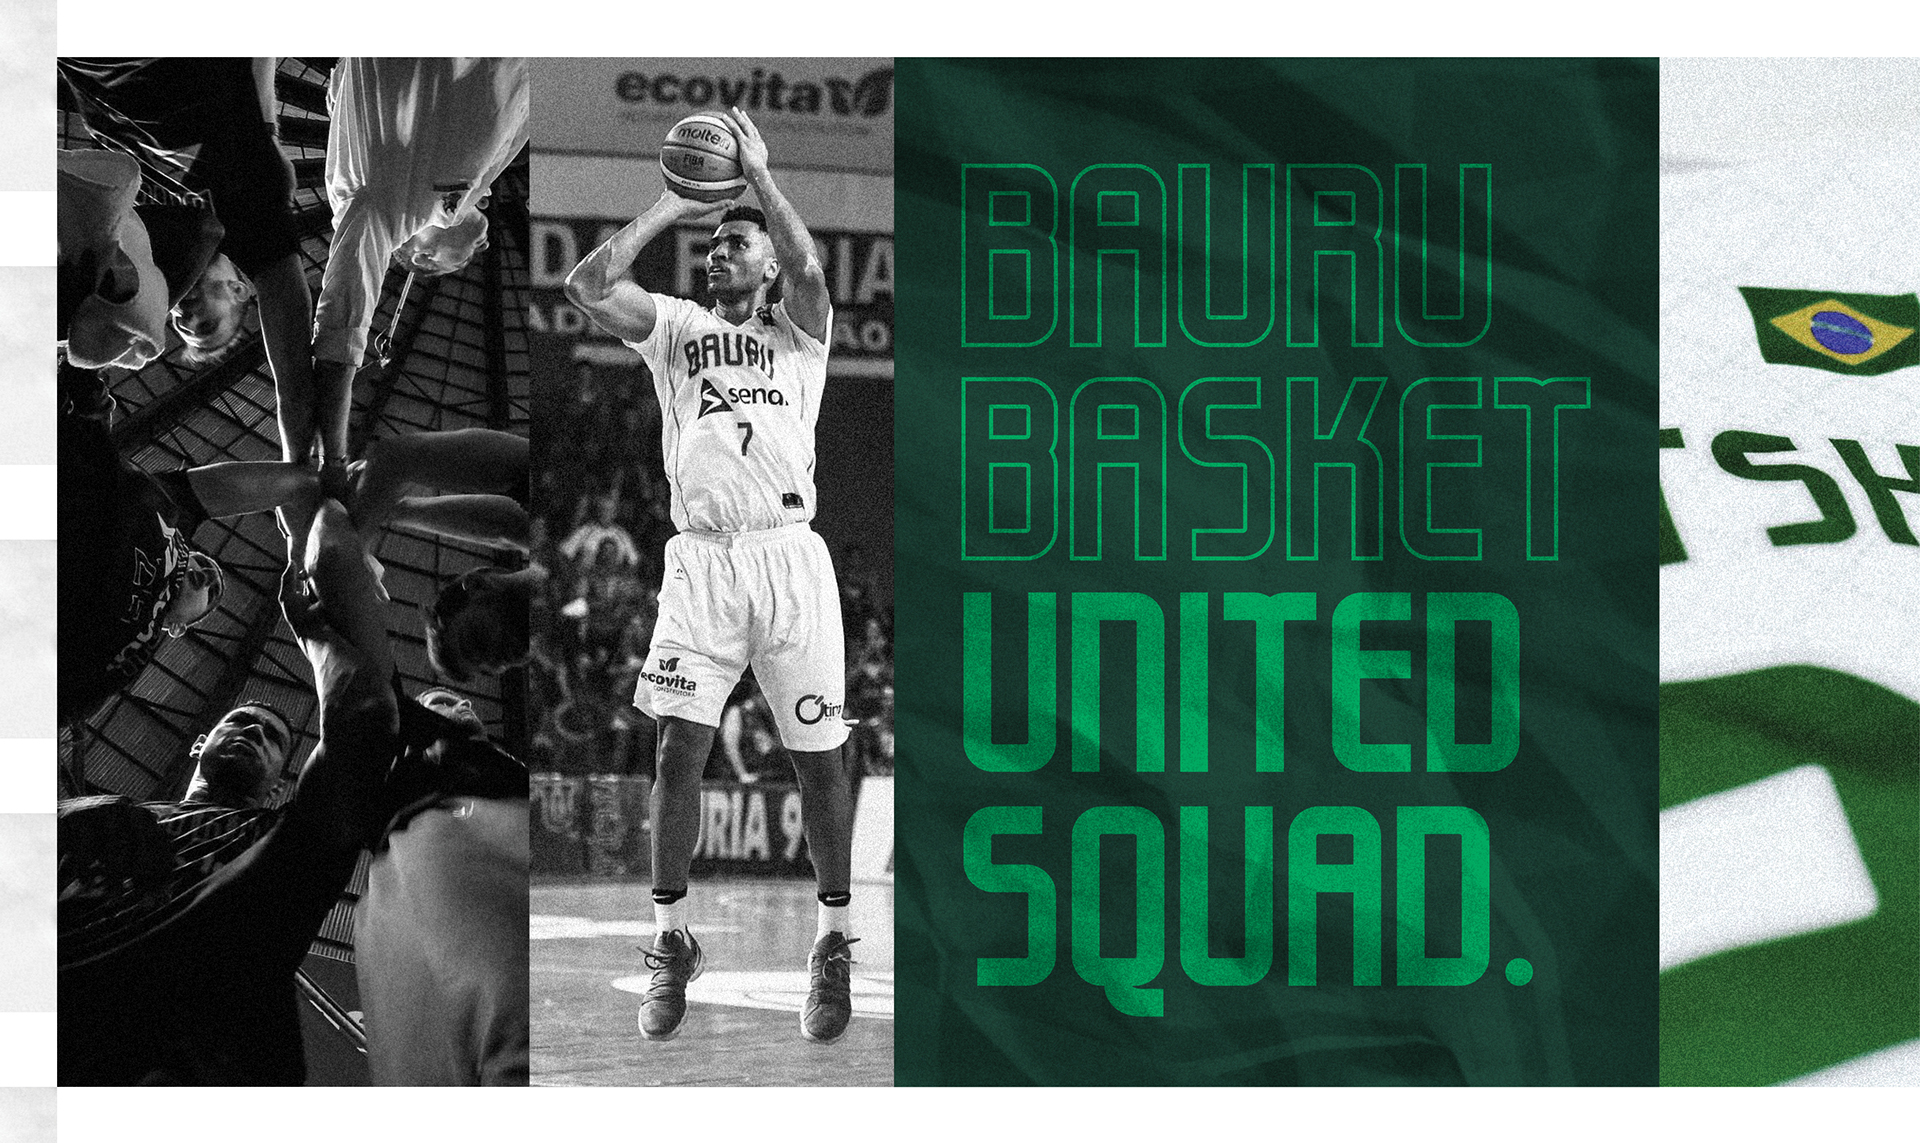 Bauru Basket - United Squad